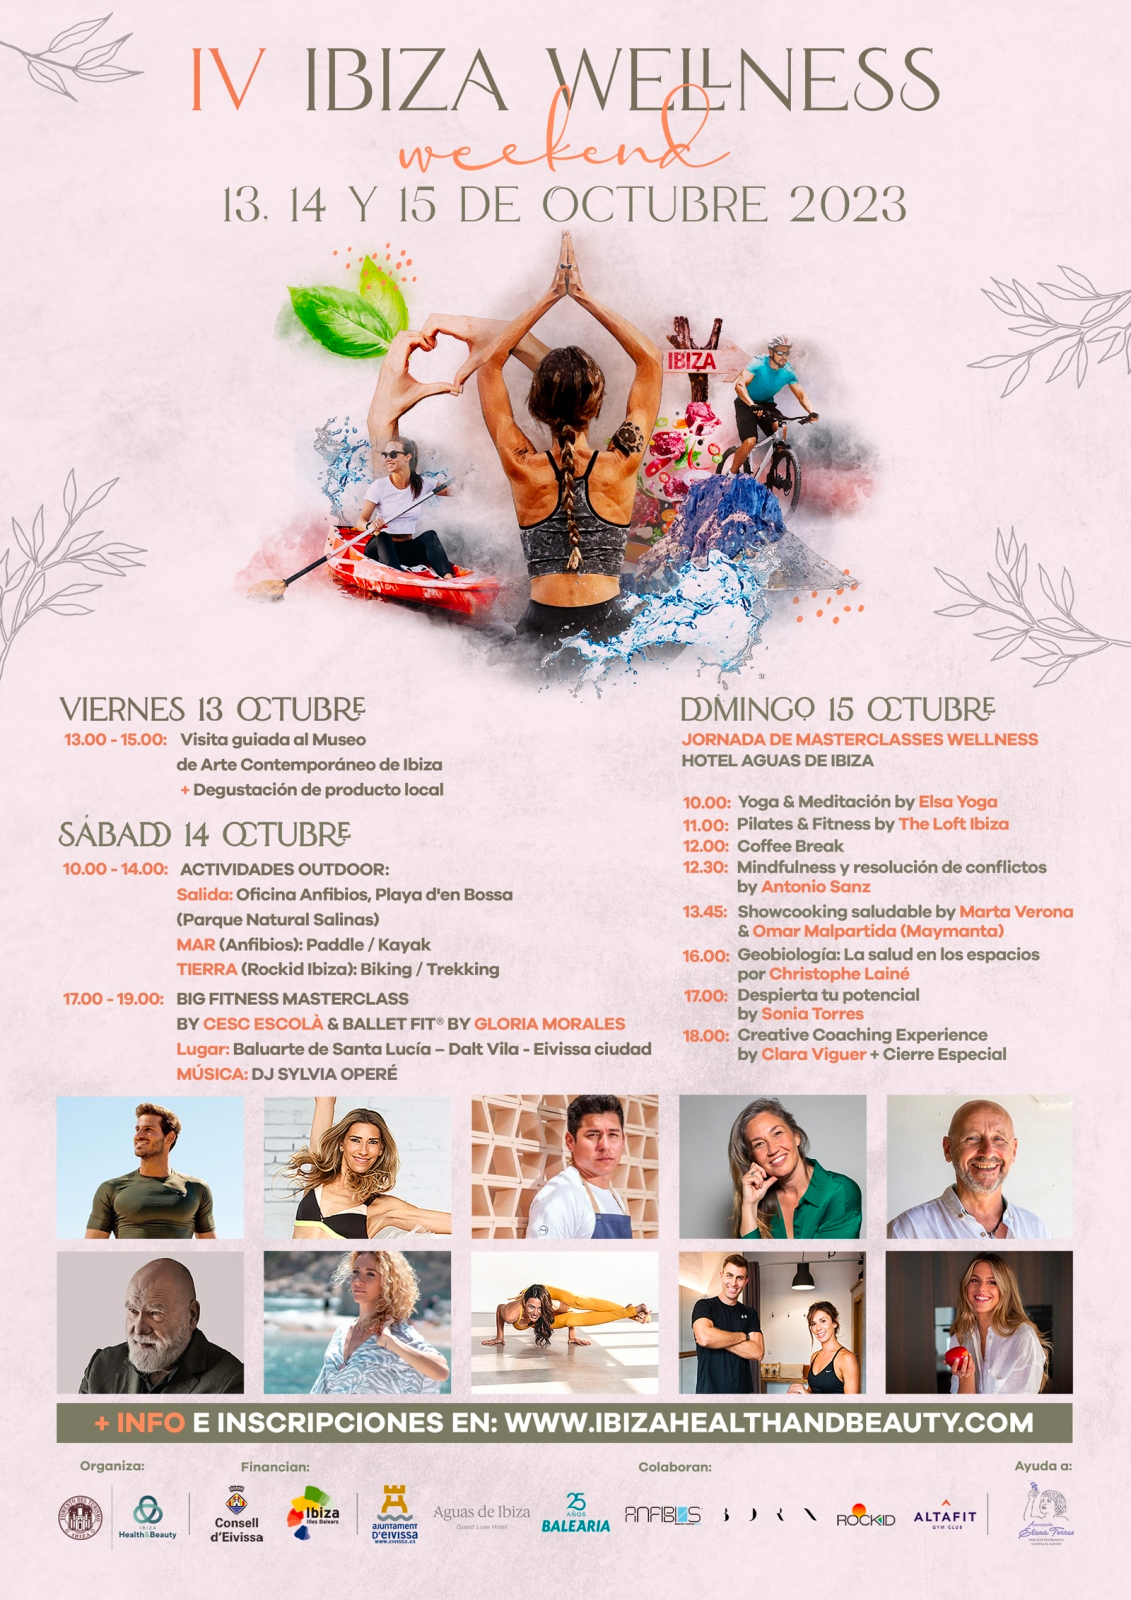 IV Ibiza Wellness Weekend 13, 14 y 15 octubre 2023